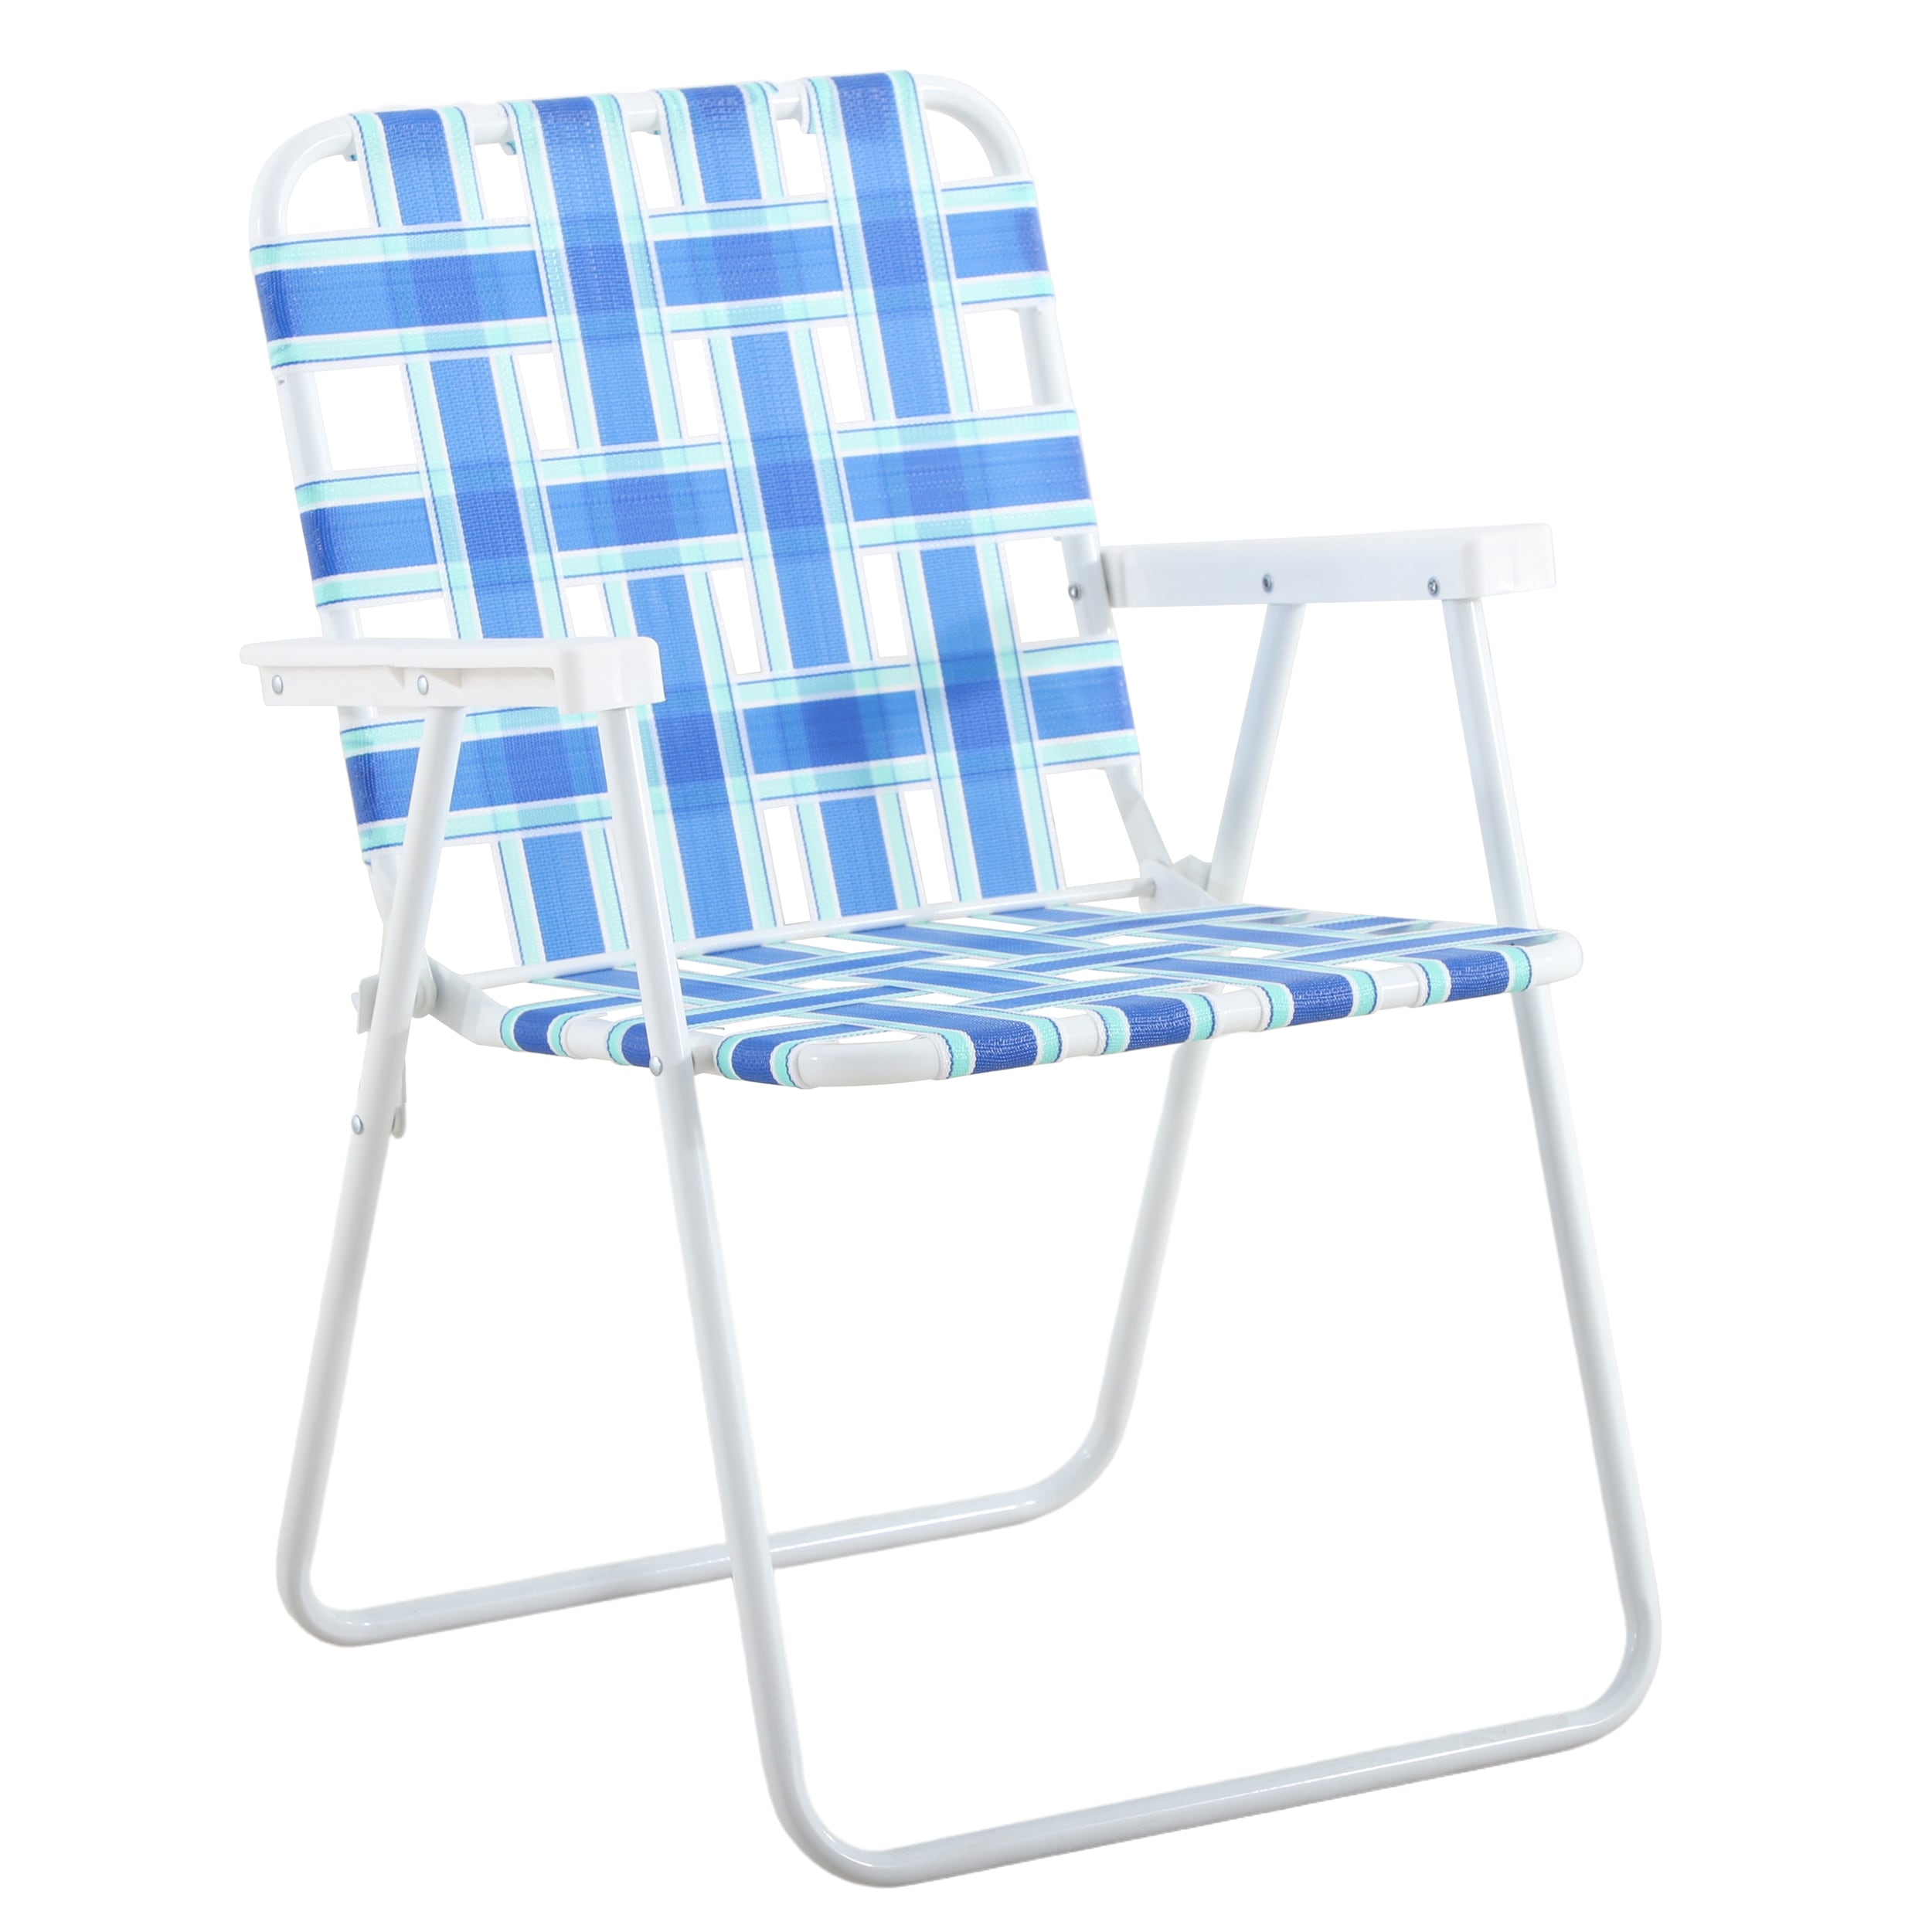 Outsider Polypropylene Blue Folding Beach Chair (Carrying Strap